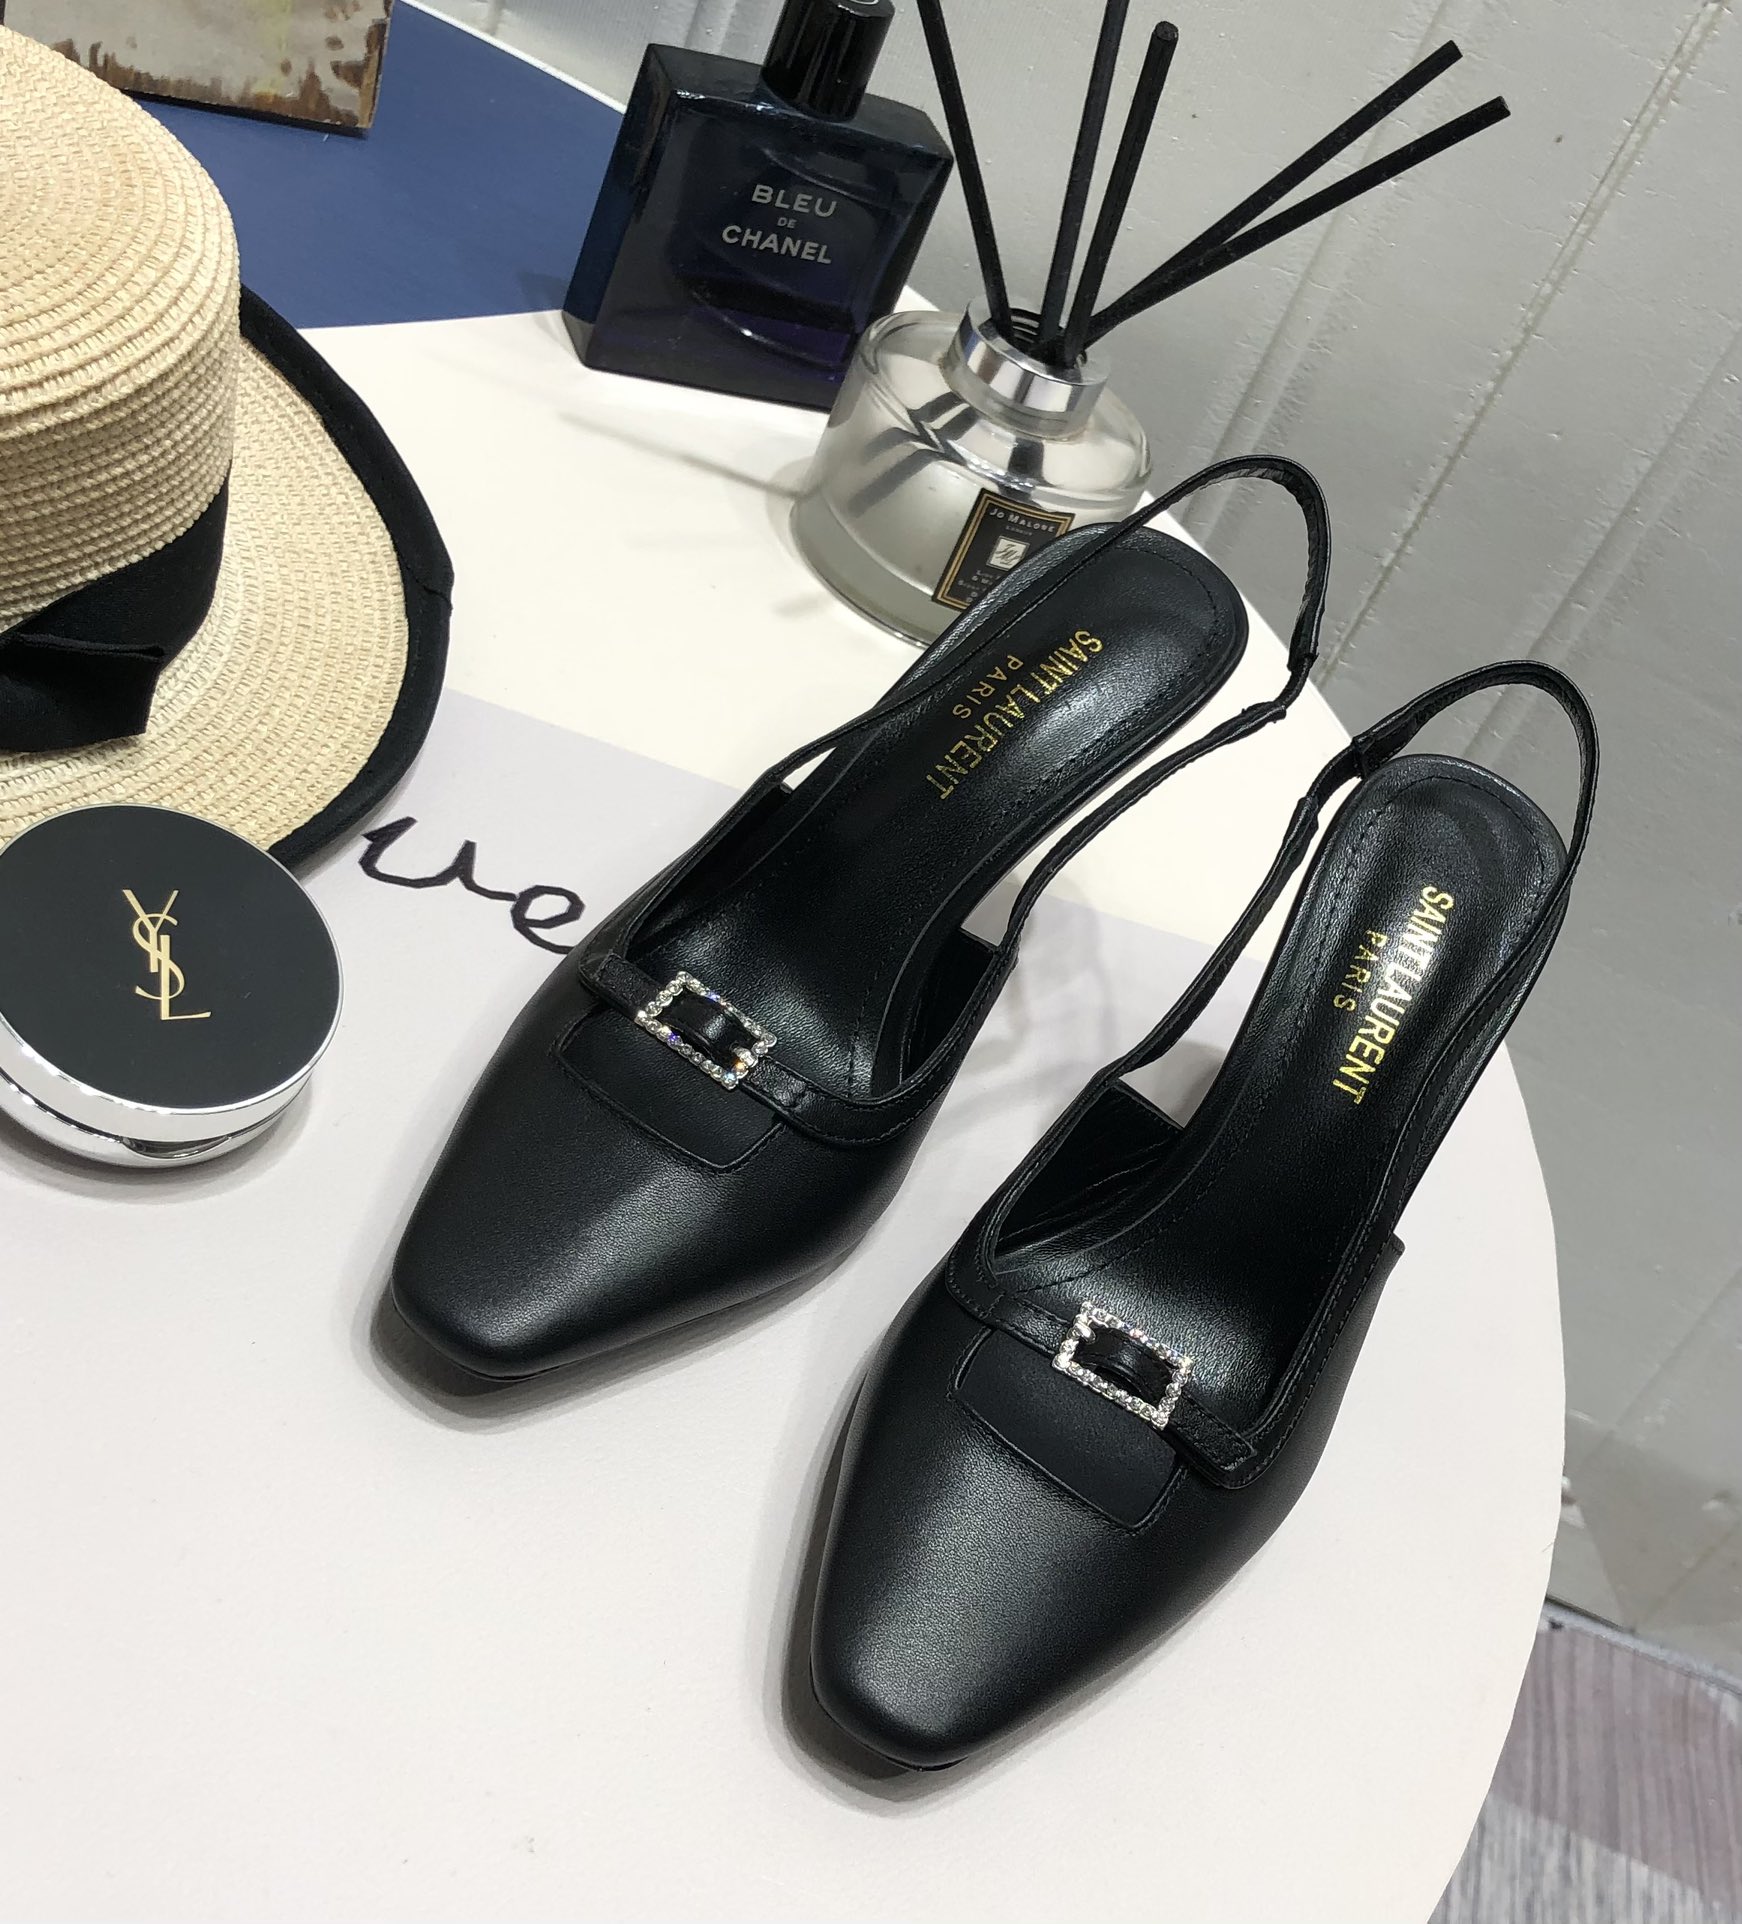 Yves Saint Laurent Shoes High Heel Pumps Sandals Set With Diamonds Cowhide Genuine Leather Patent Sheepskin